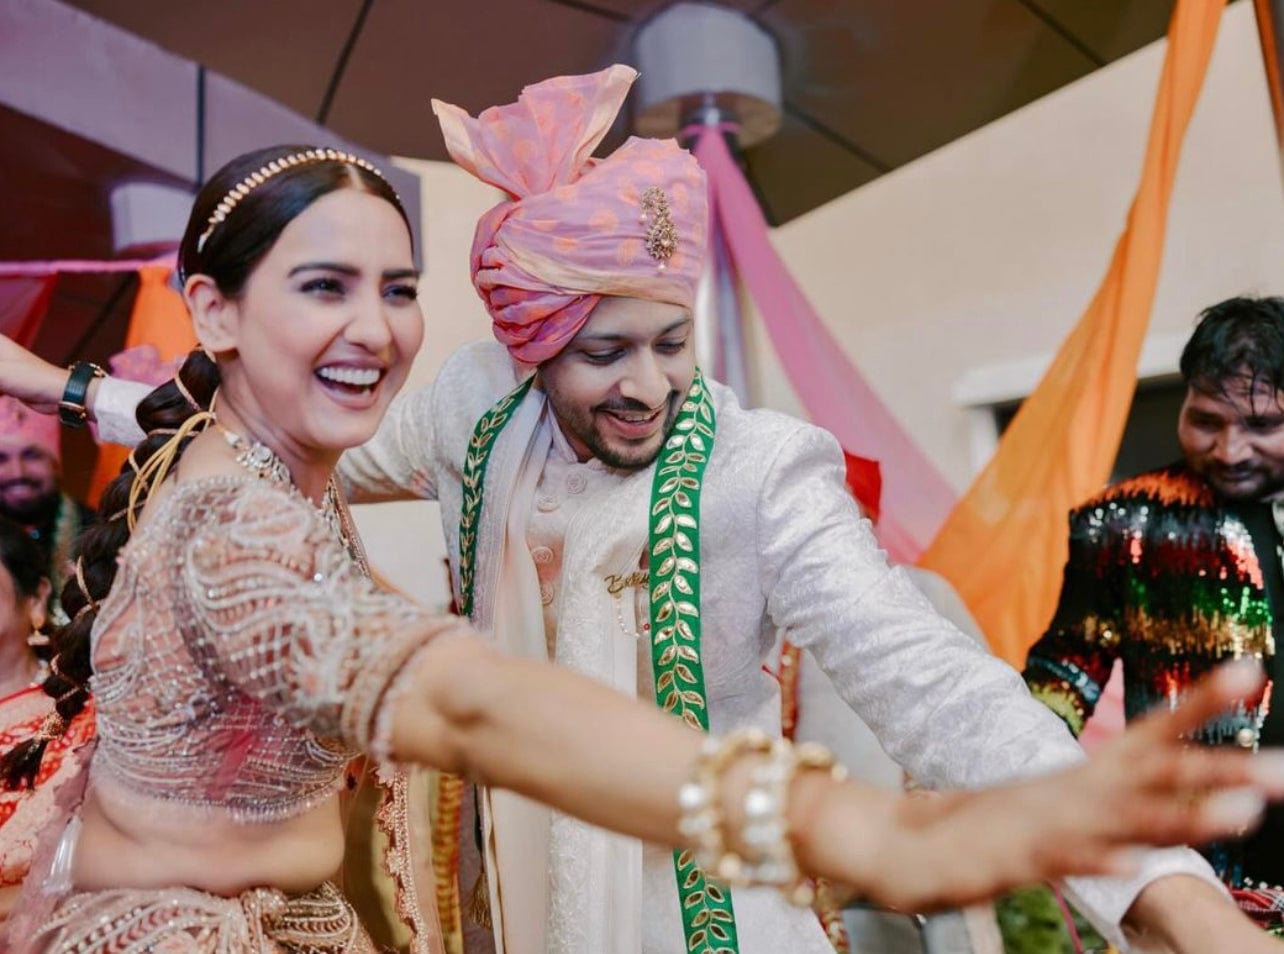 Lamansh Barati Swagat mala LAMANSH Trending 🔥 welcome stoles for welcoming guests in Indian weddings / Bollywood weddings